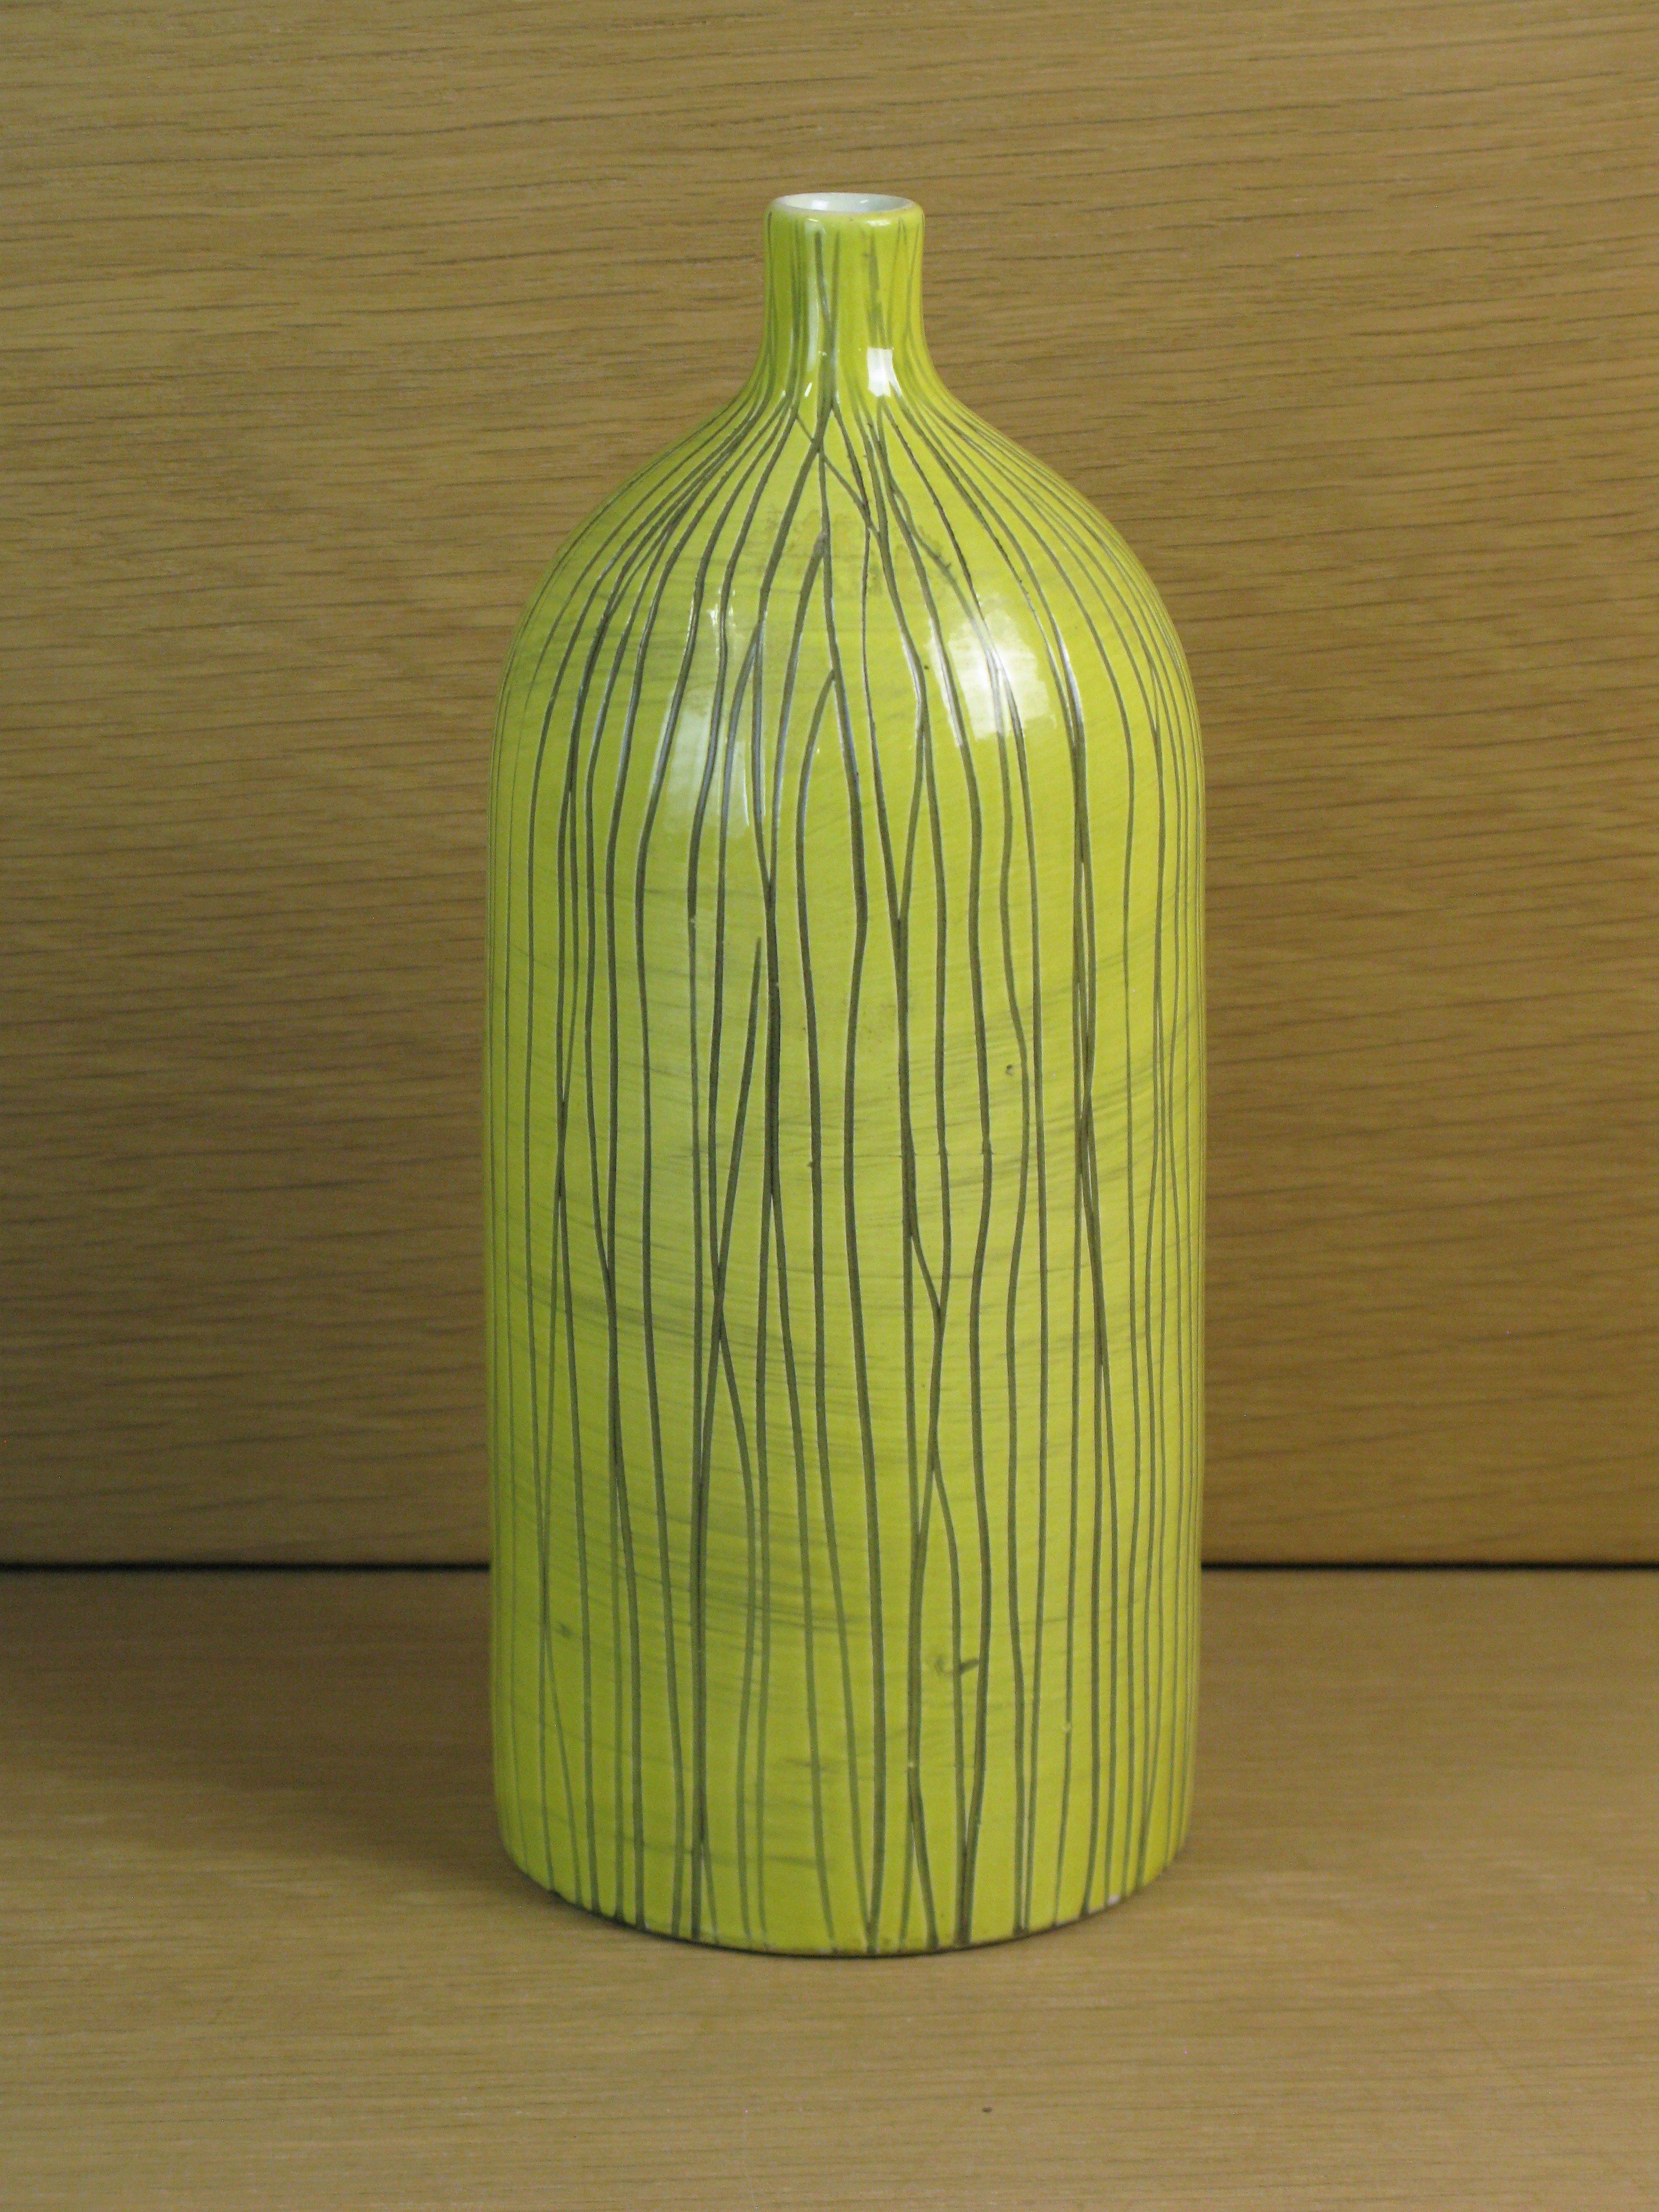 vibrato vase 4292 sold